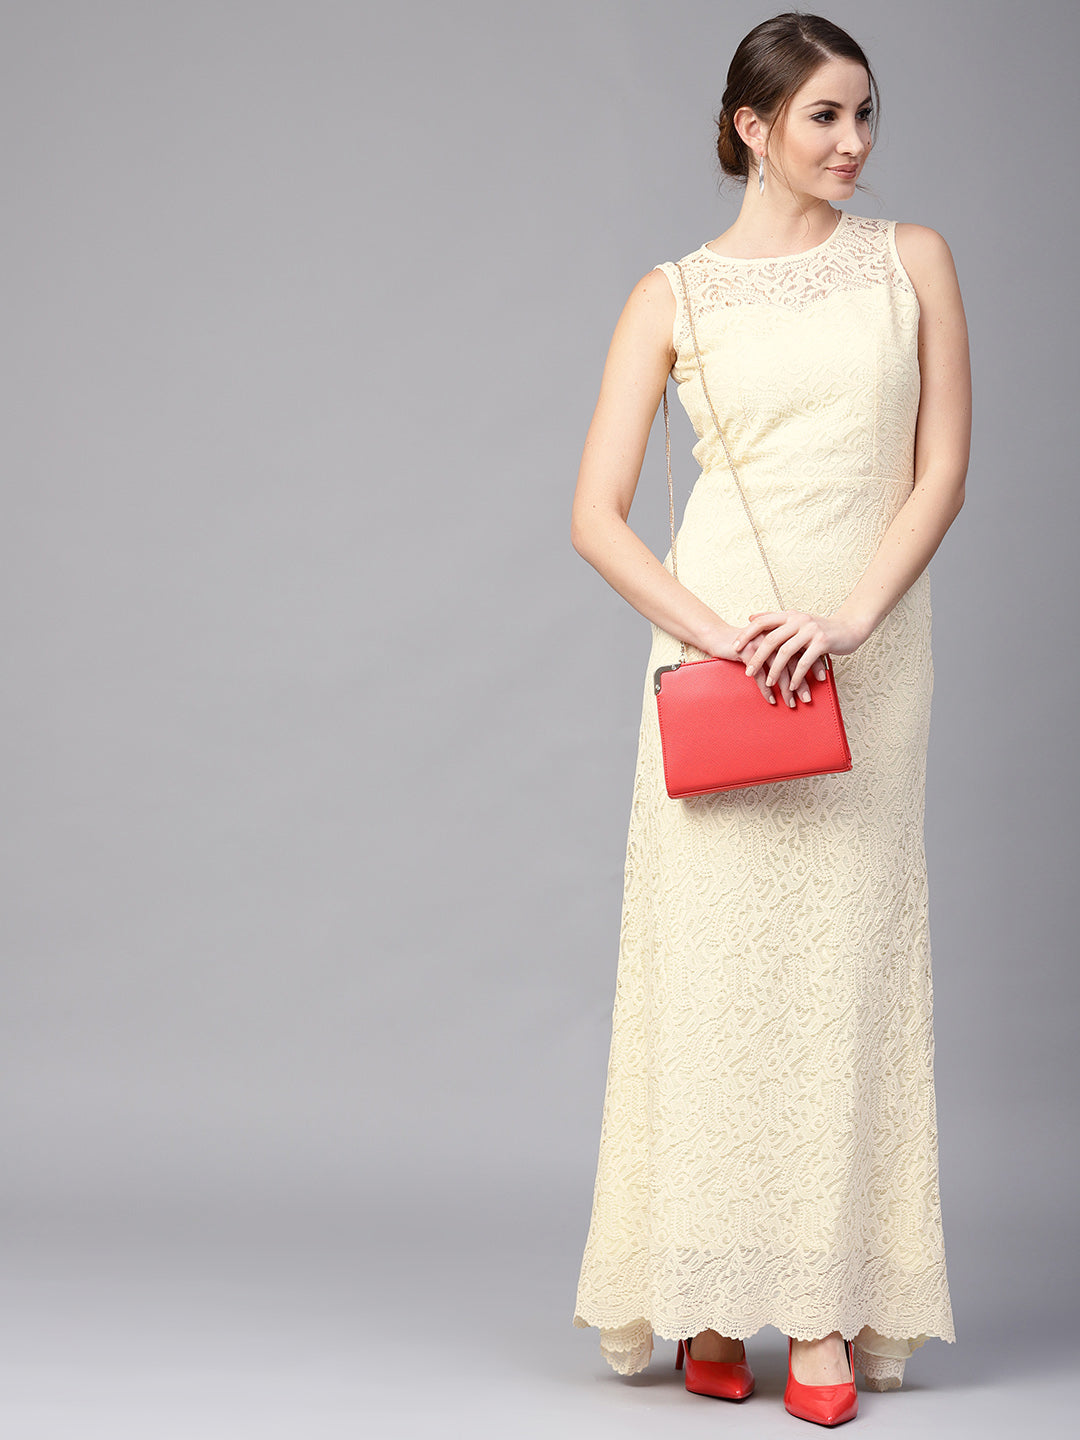 Athena Yellow Lace Maxi Dress - Athena Lifestyle